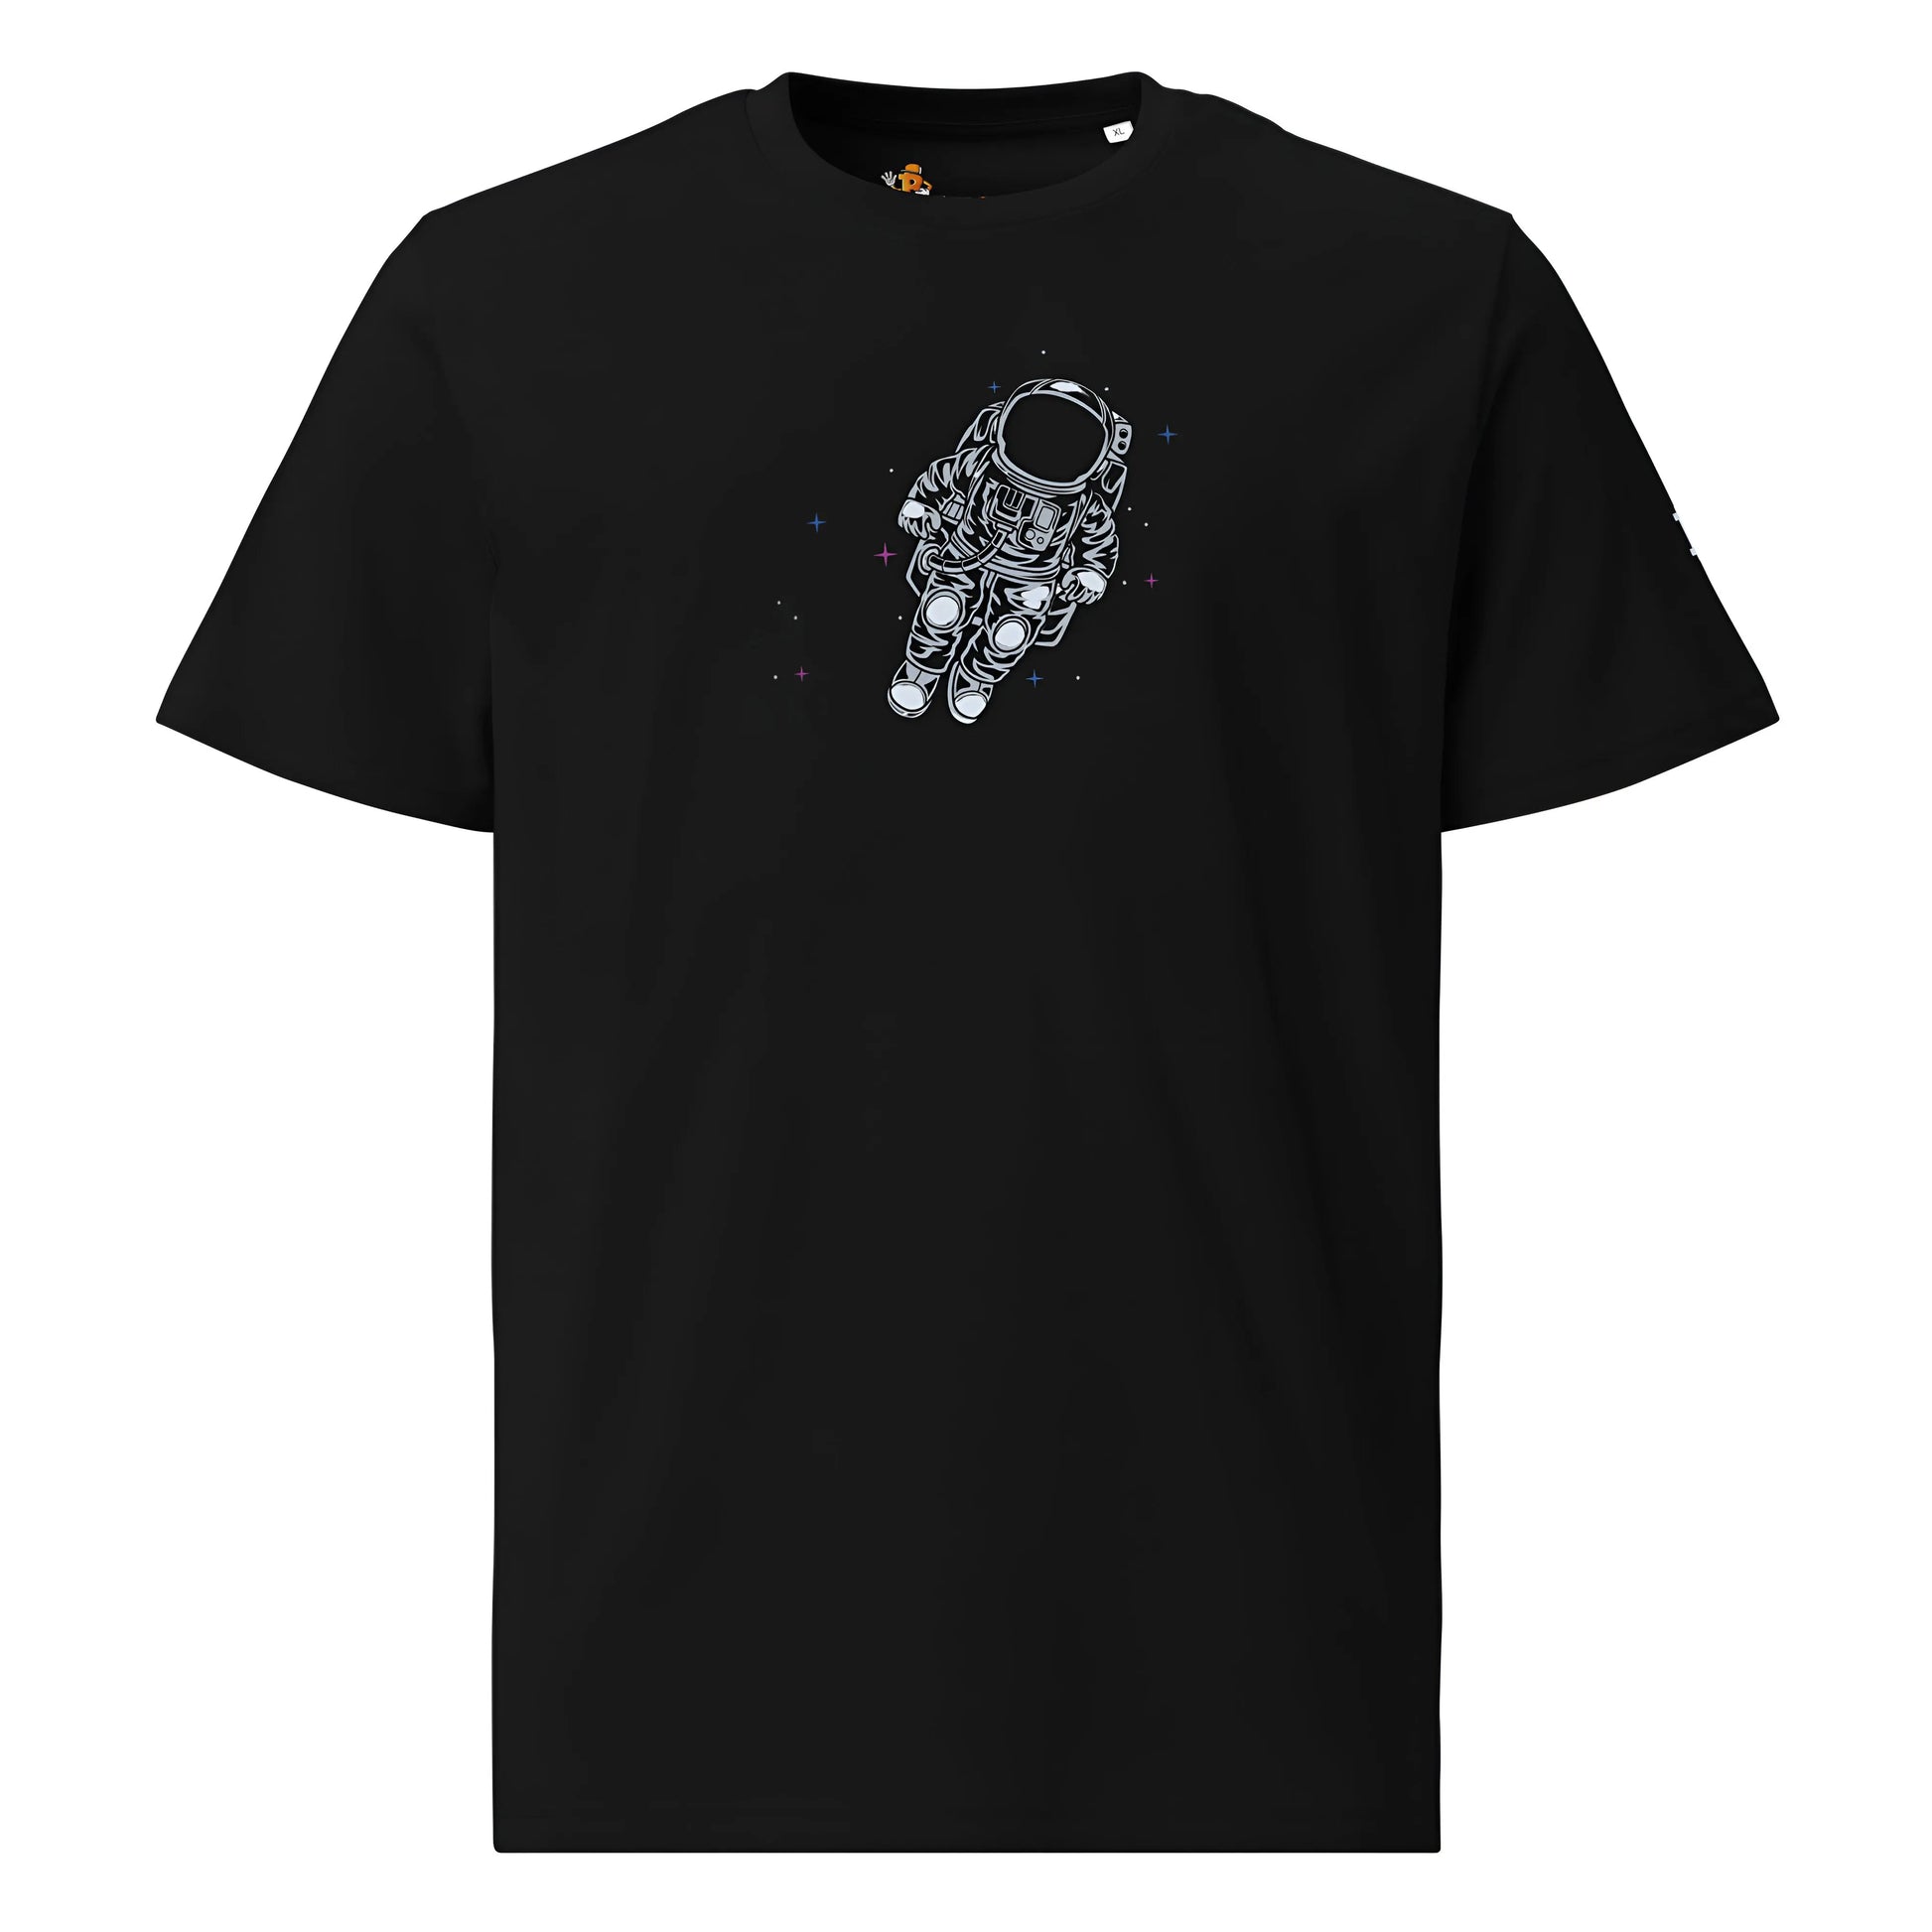 Bitcoin Space Astronaut - Premium Unisex Organic Cotton Bitcoin T-shirt Black